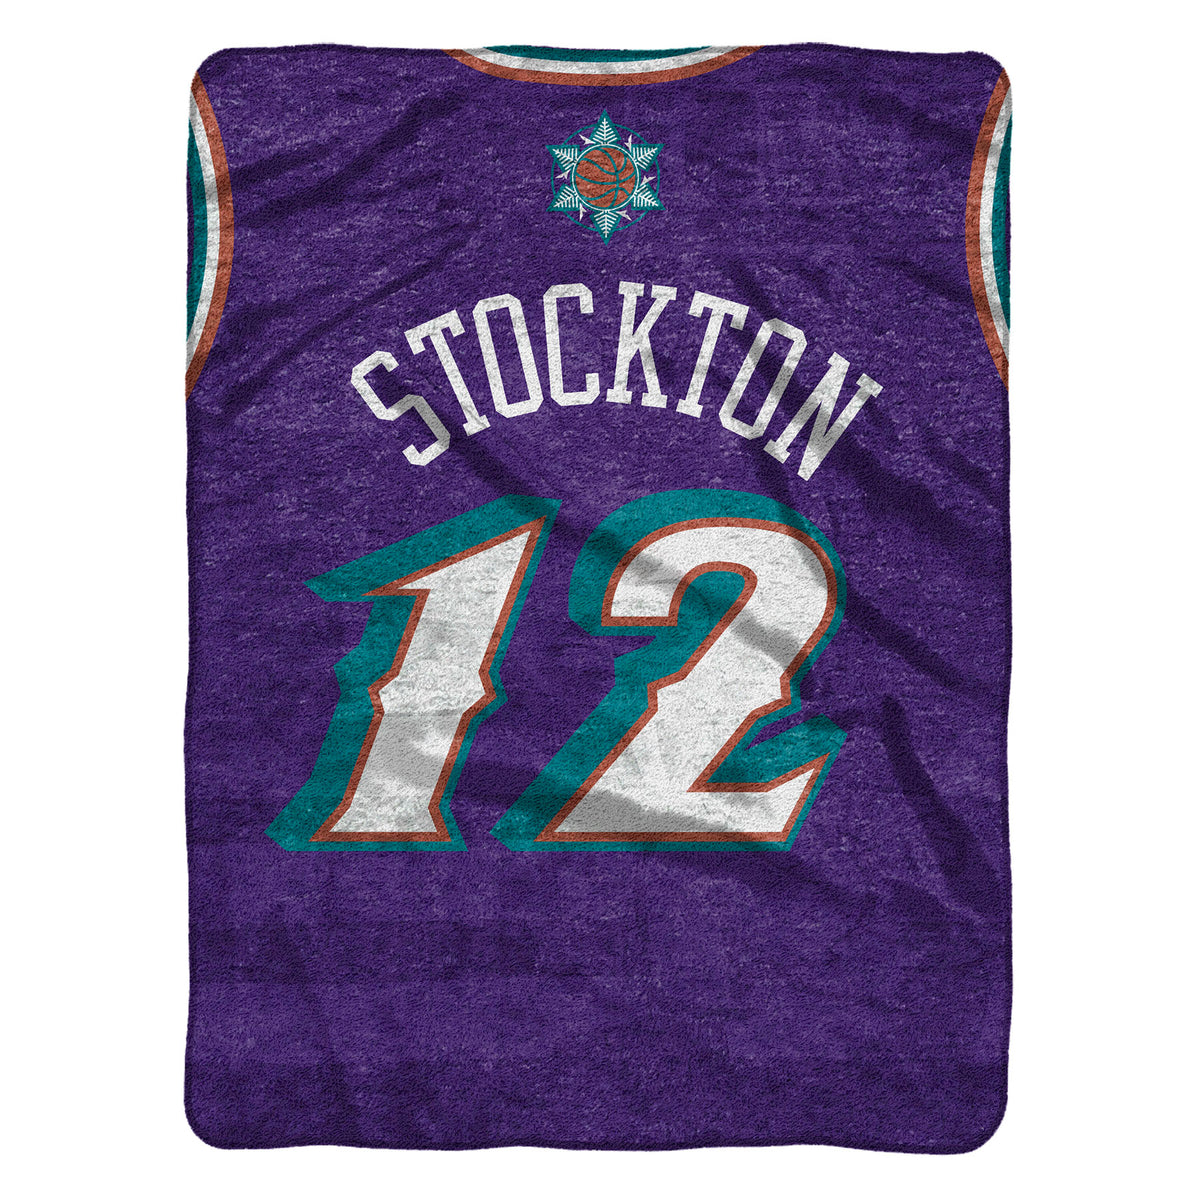 Utah Jazz John Stockton 60” x 80” Plush Jersey Blanket